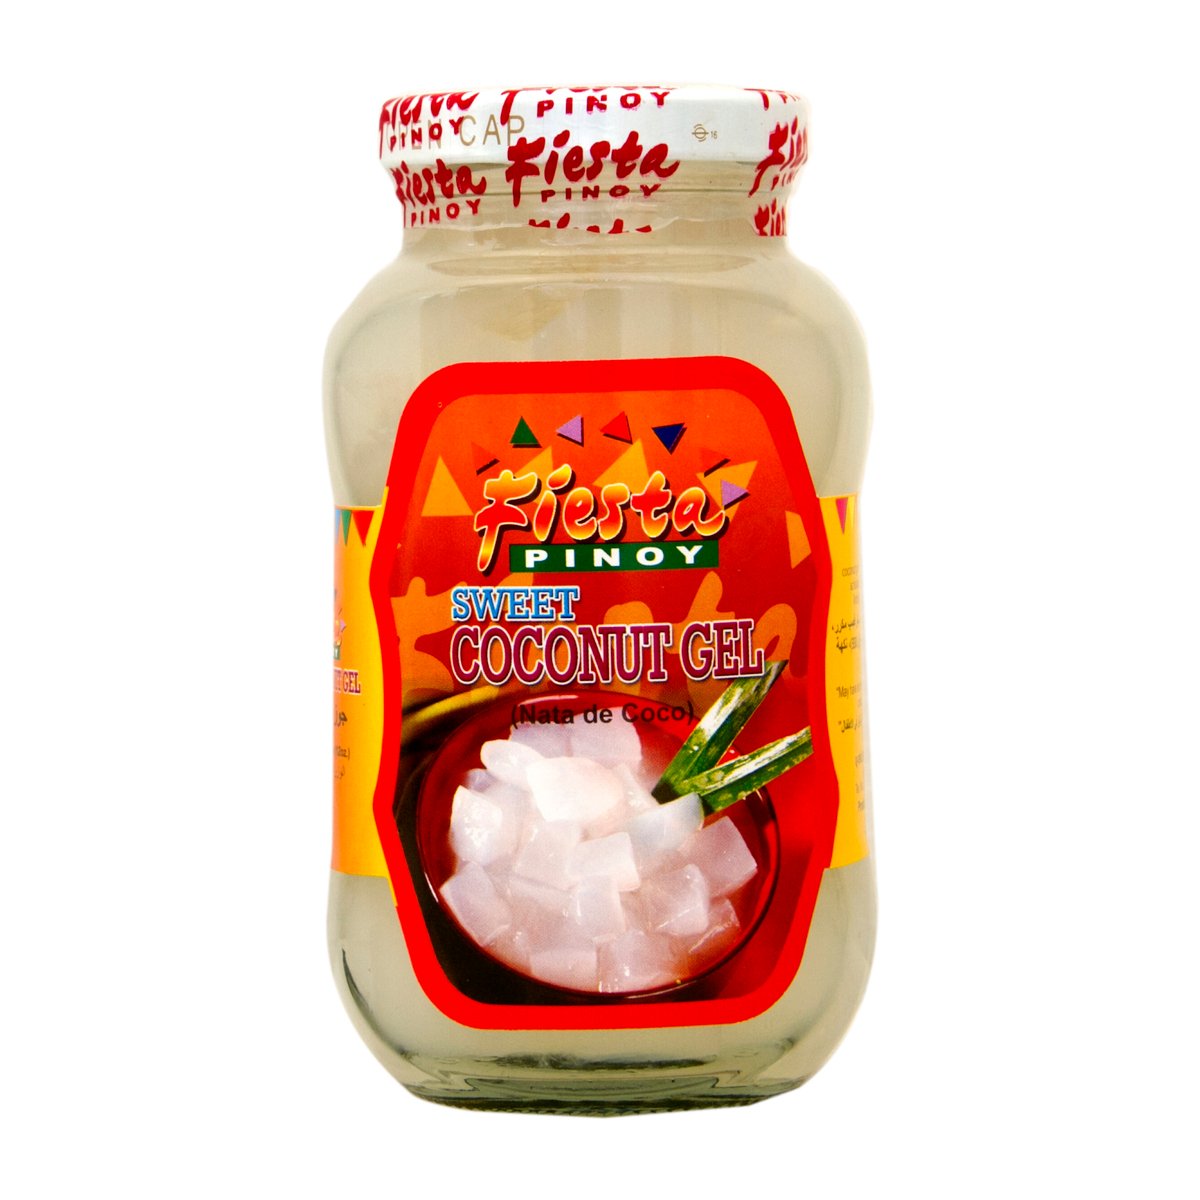 Fiesta Pinoy Sweet Coconut Gel 340 g